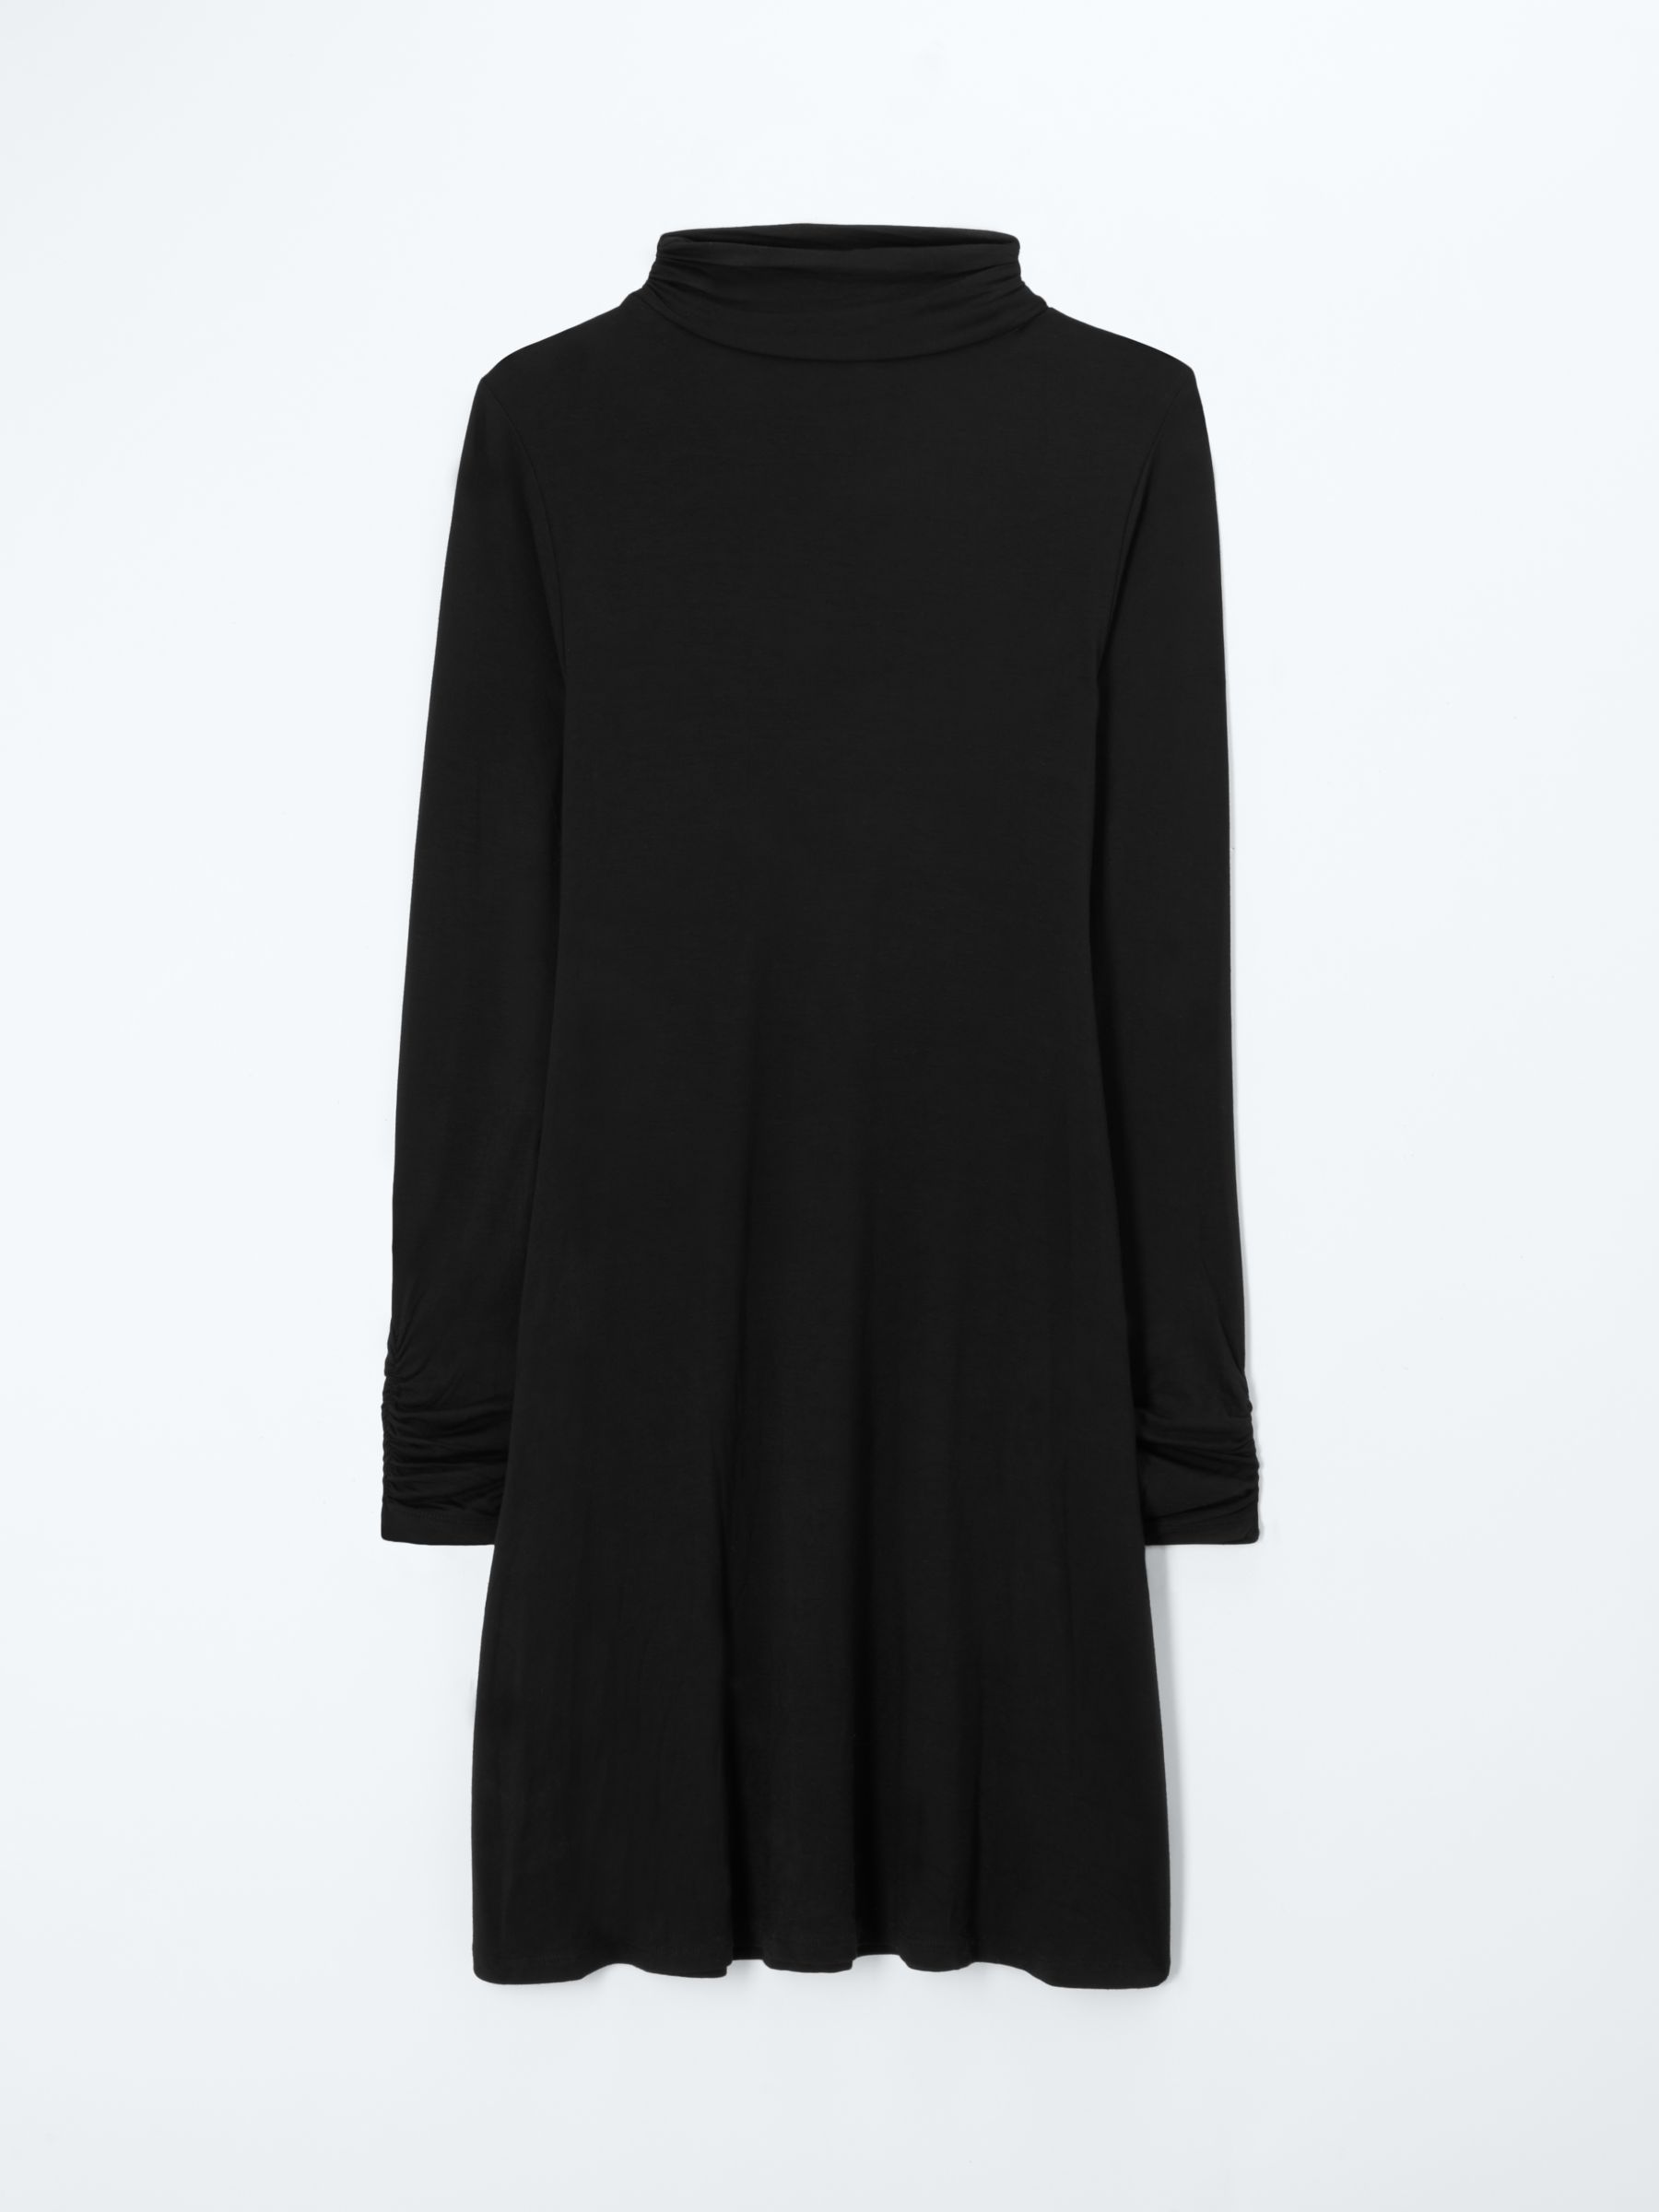 Buy John Lewis ANYDAY Fit & Flare Jersey Dress, Black Online at johnlewis.com